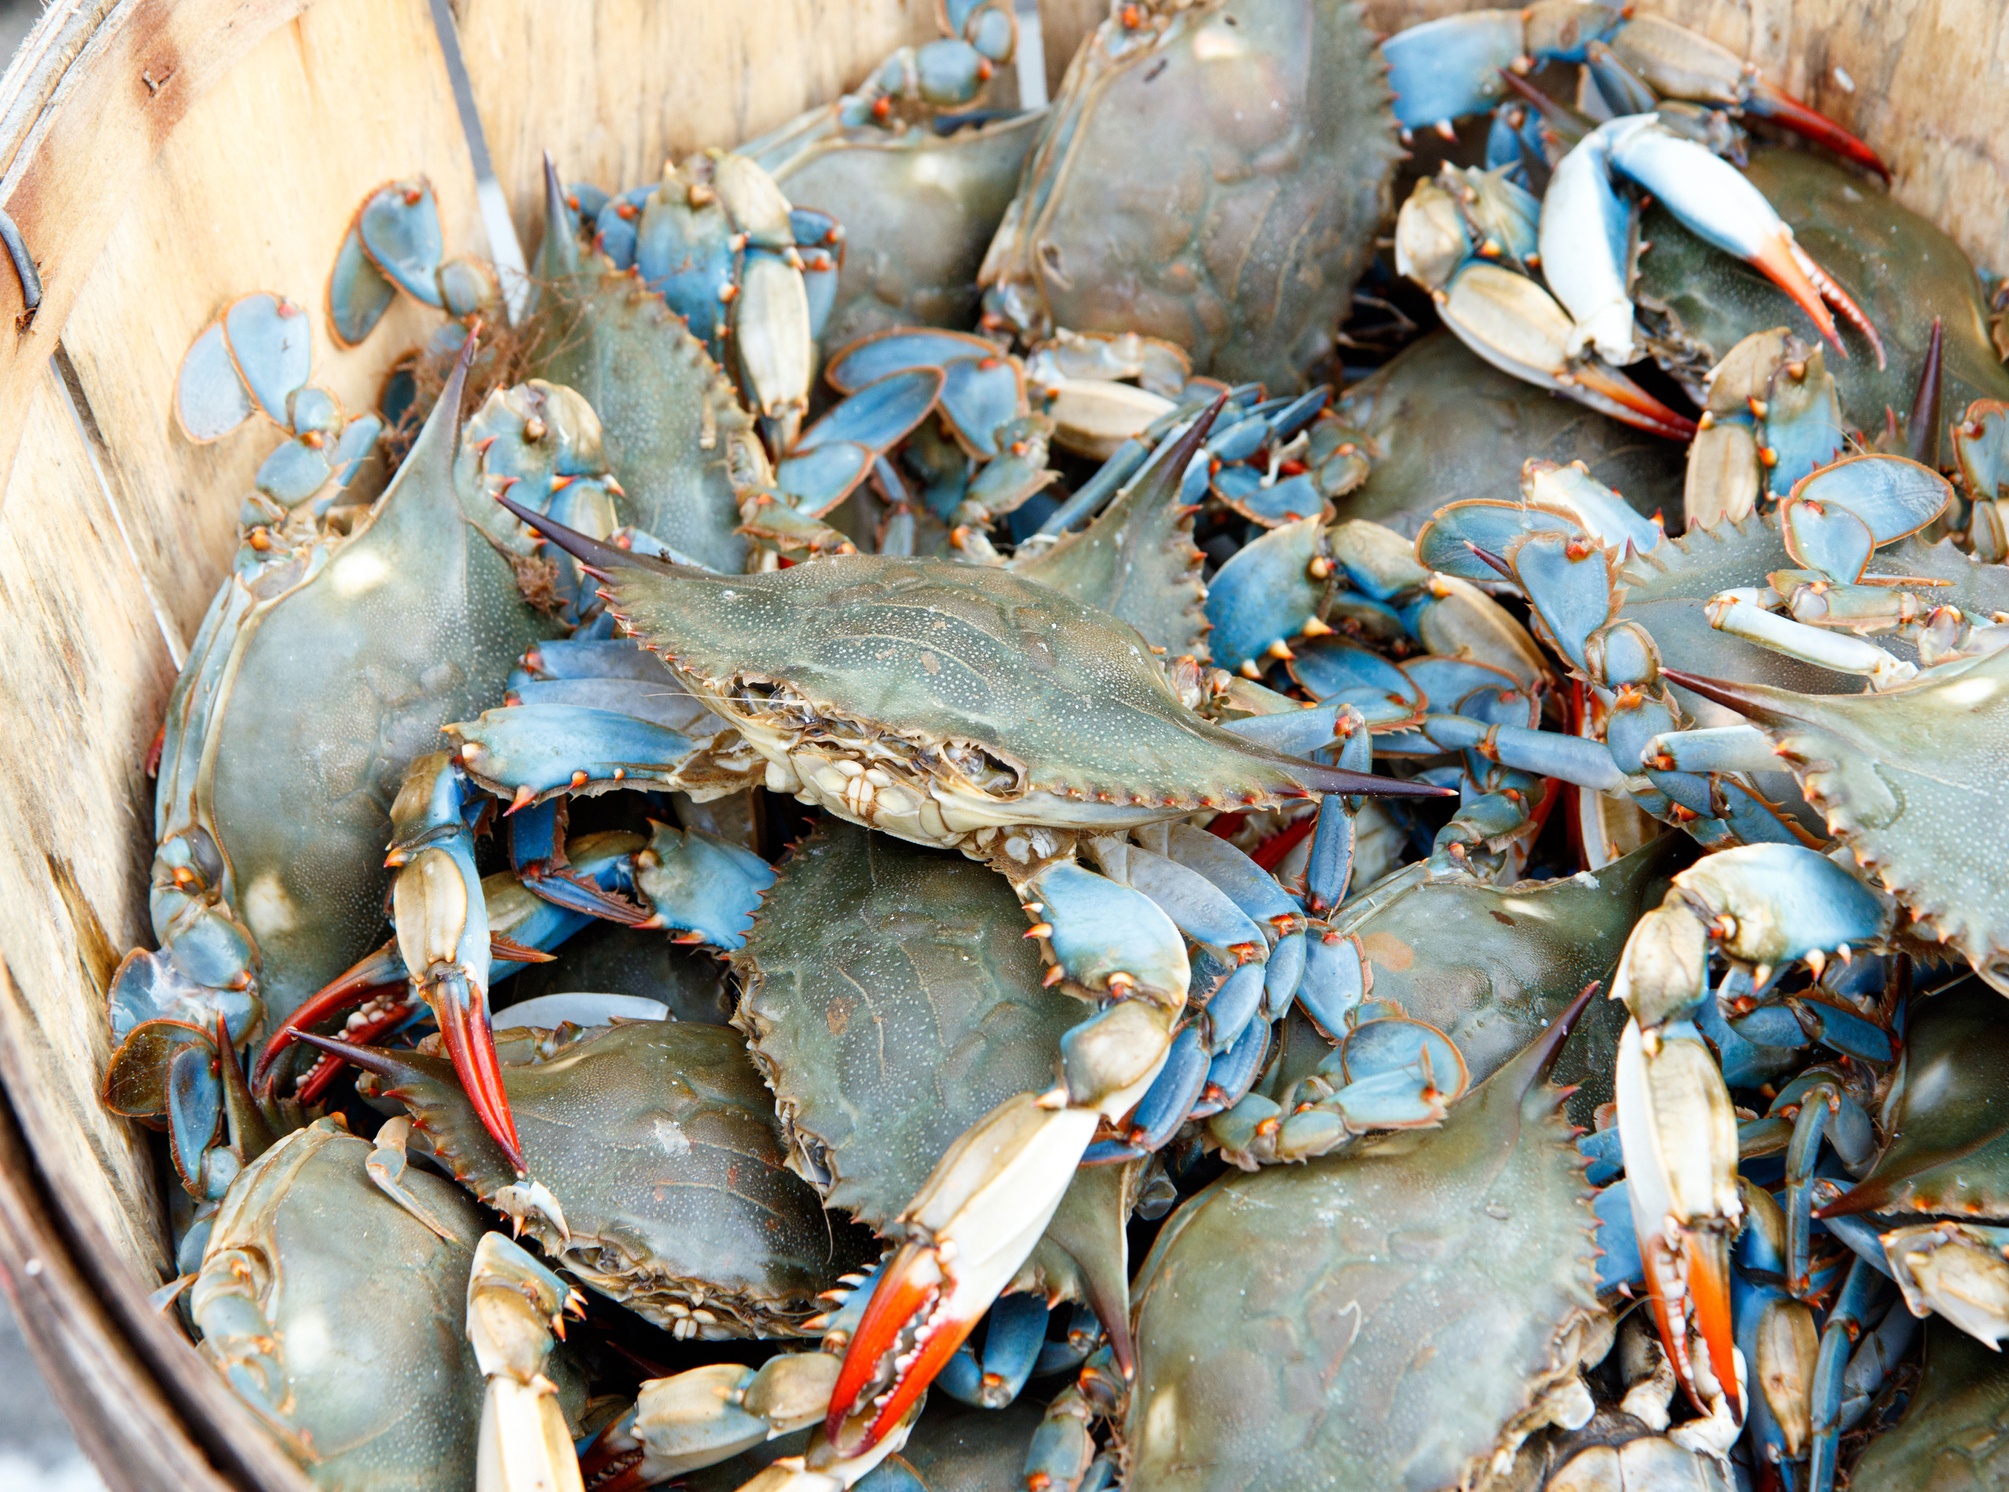 Bushel of blue claw crabs